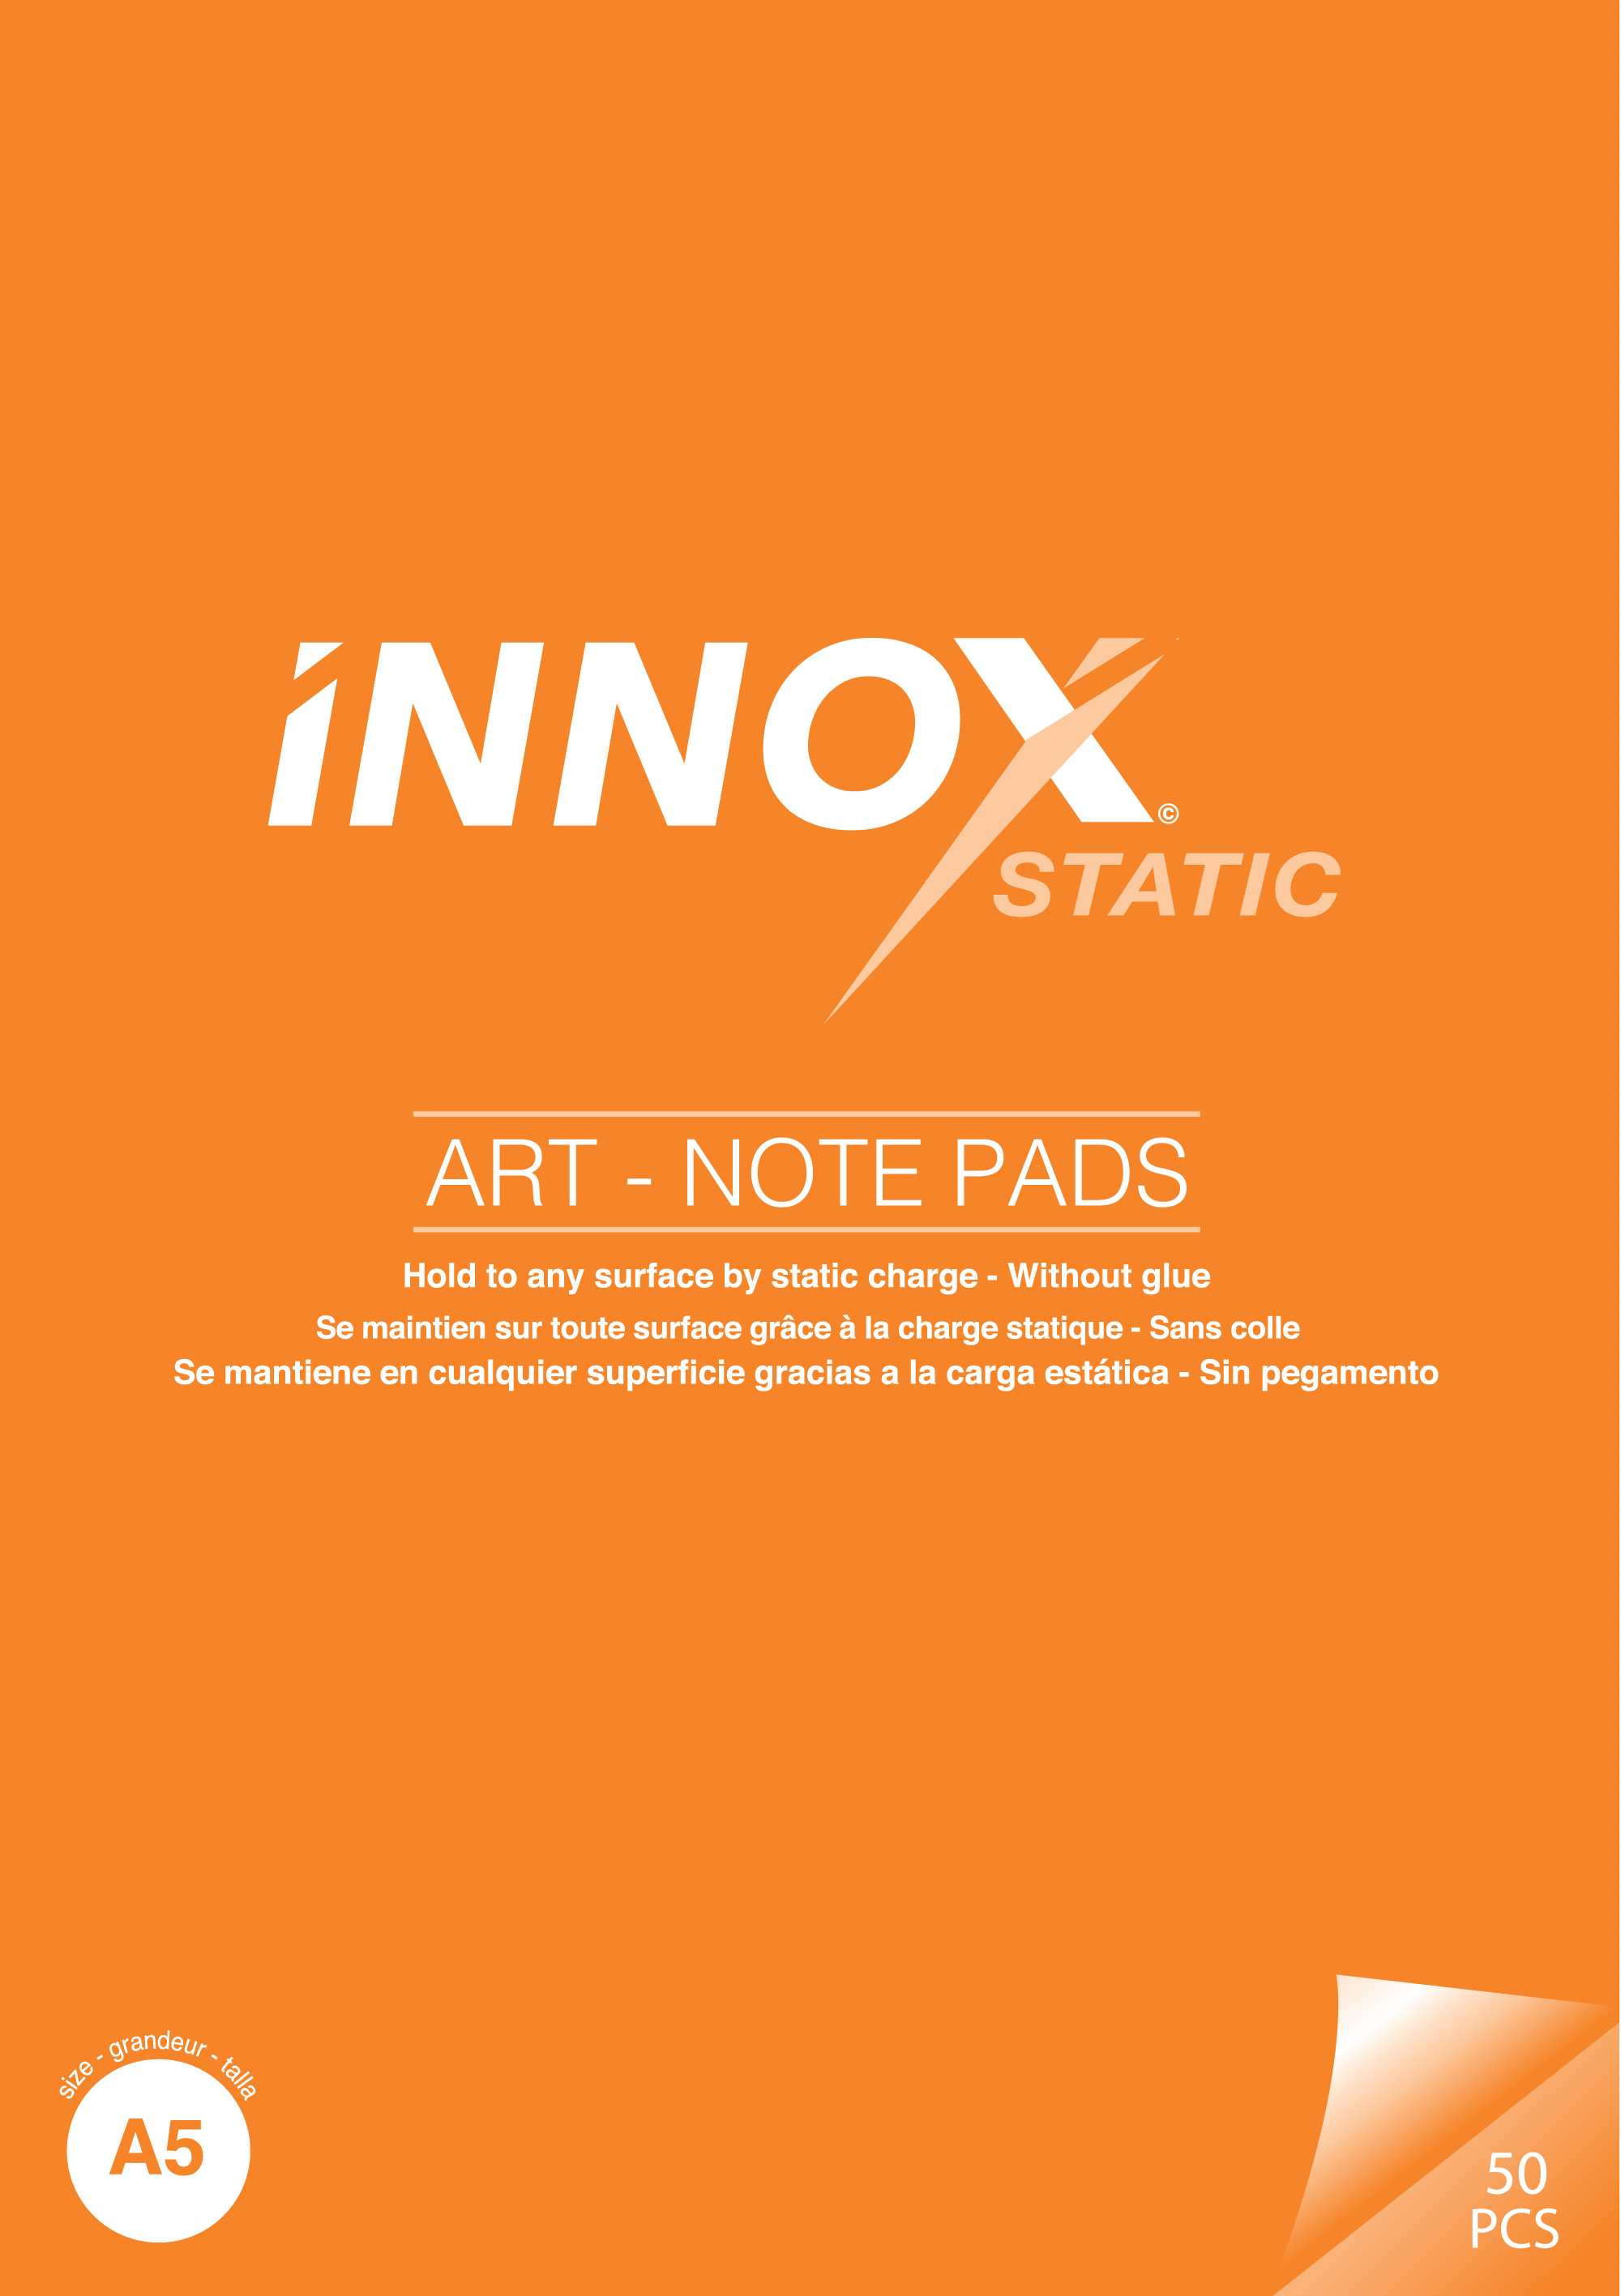 Art-Note Pads